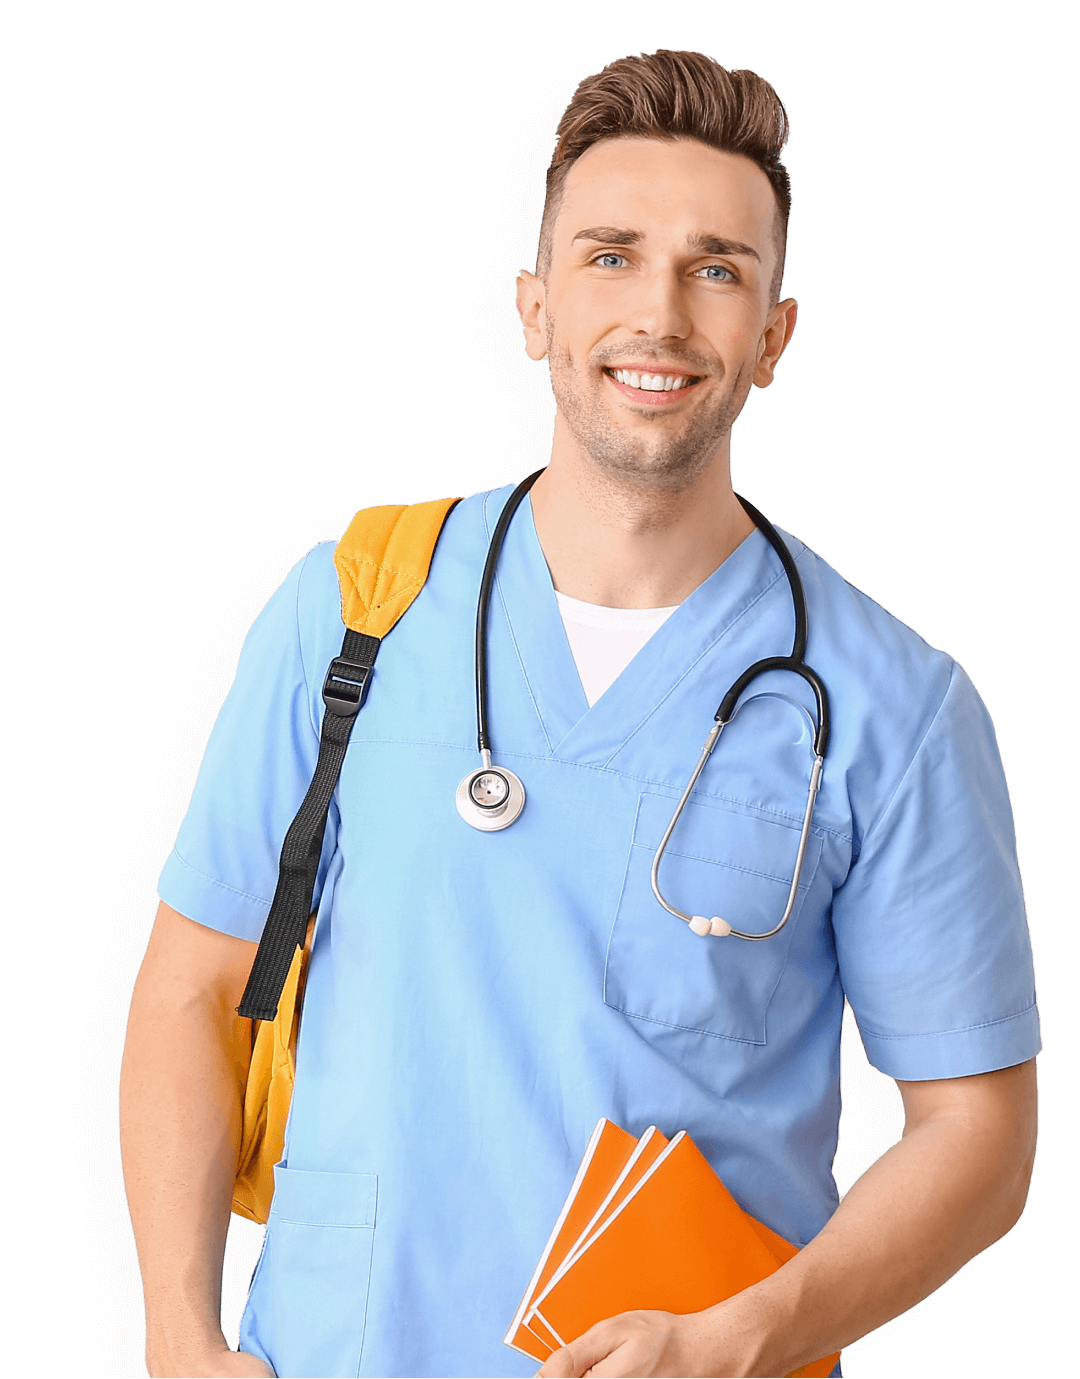 Nephrology-Medical Student professional